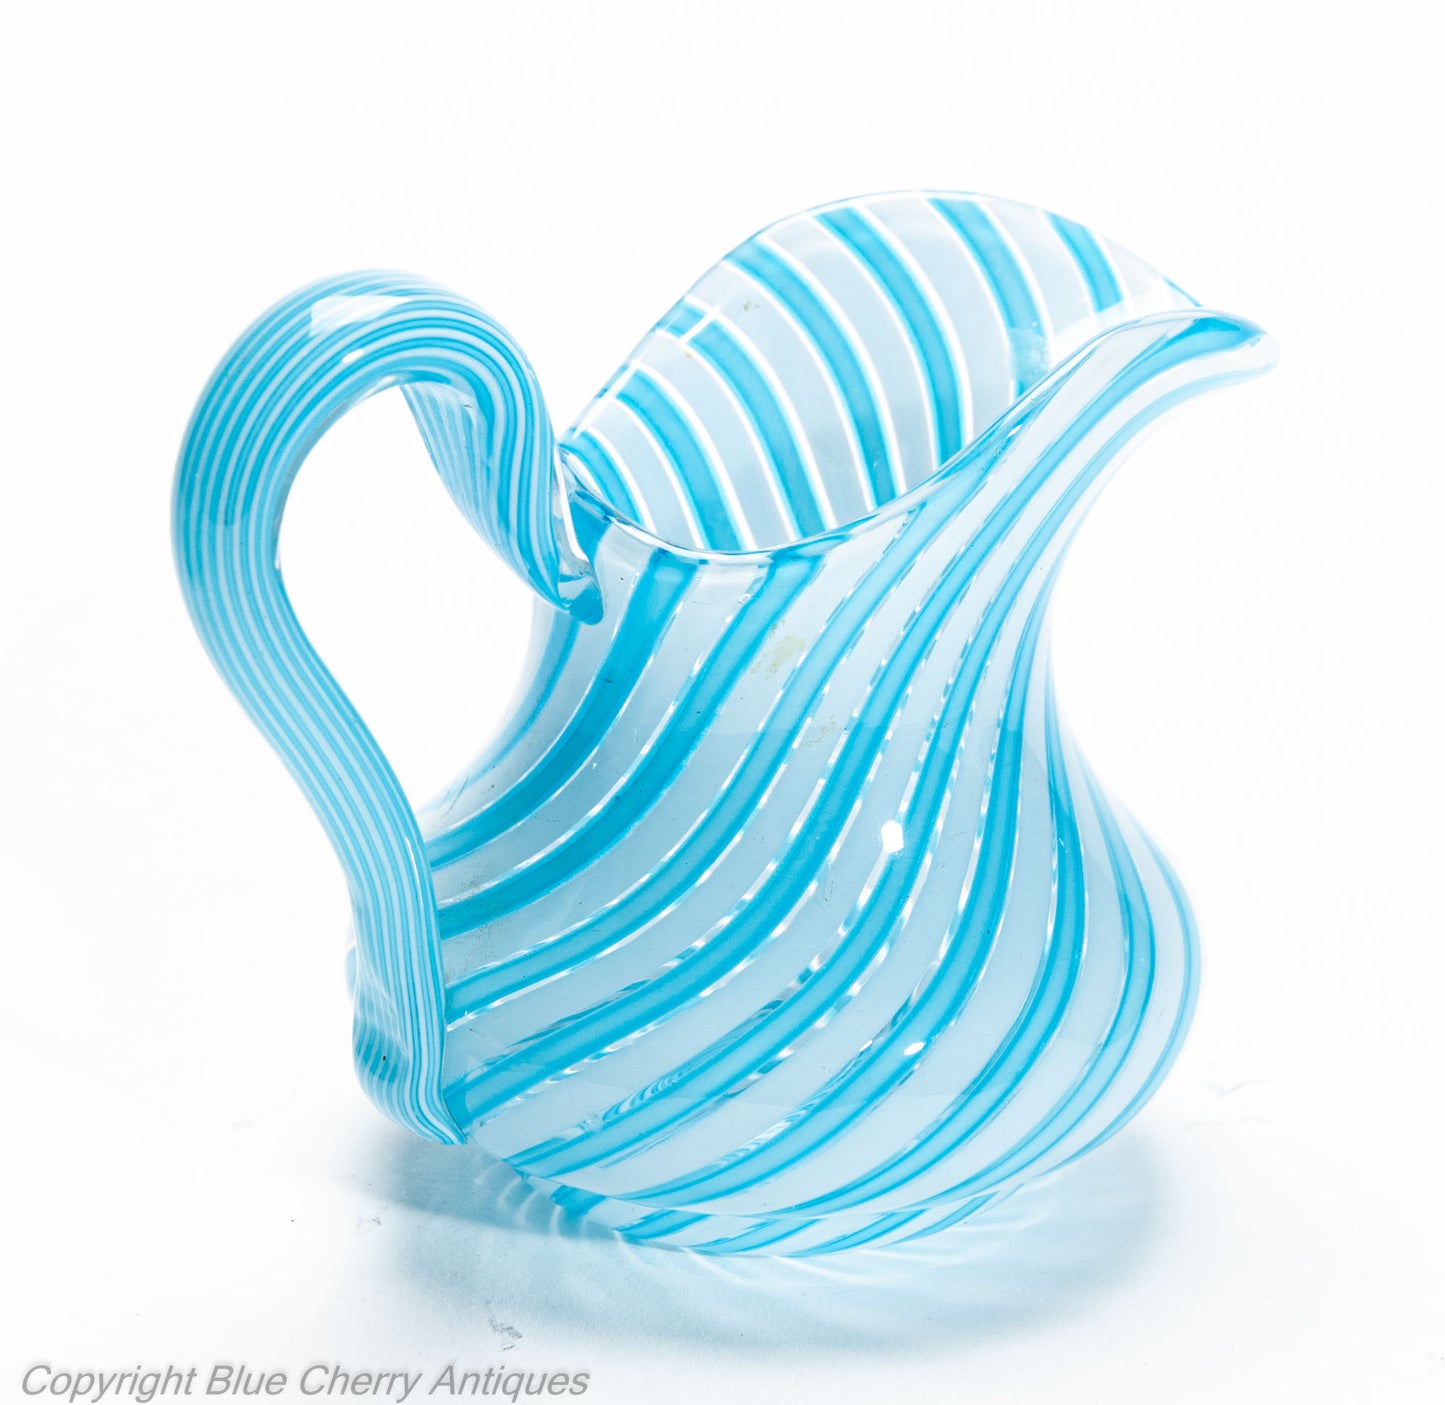 Antique Clichy Swirl Glass Jug & Bowl Set in Aqua Blue - French 2nd Empire c1870 (Code 2028)